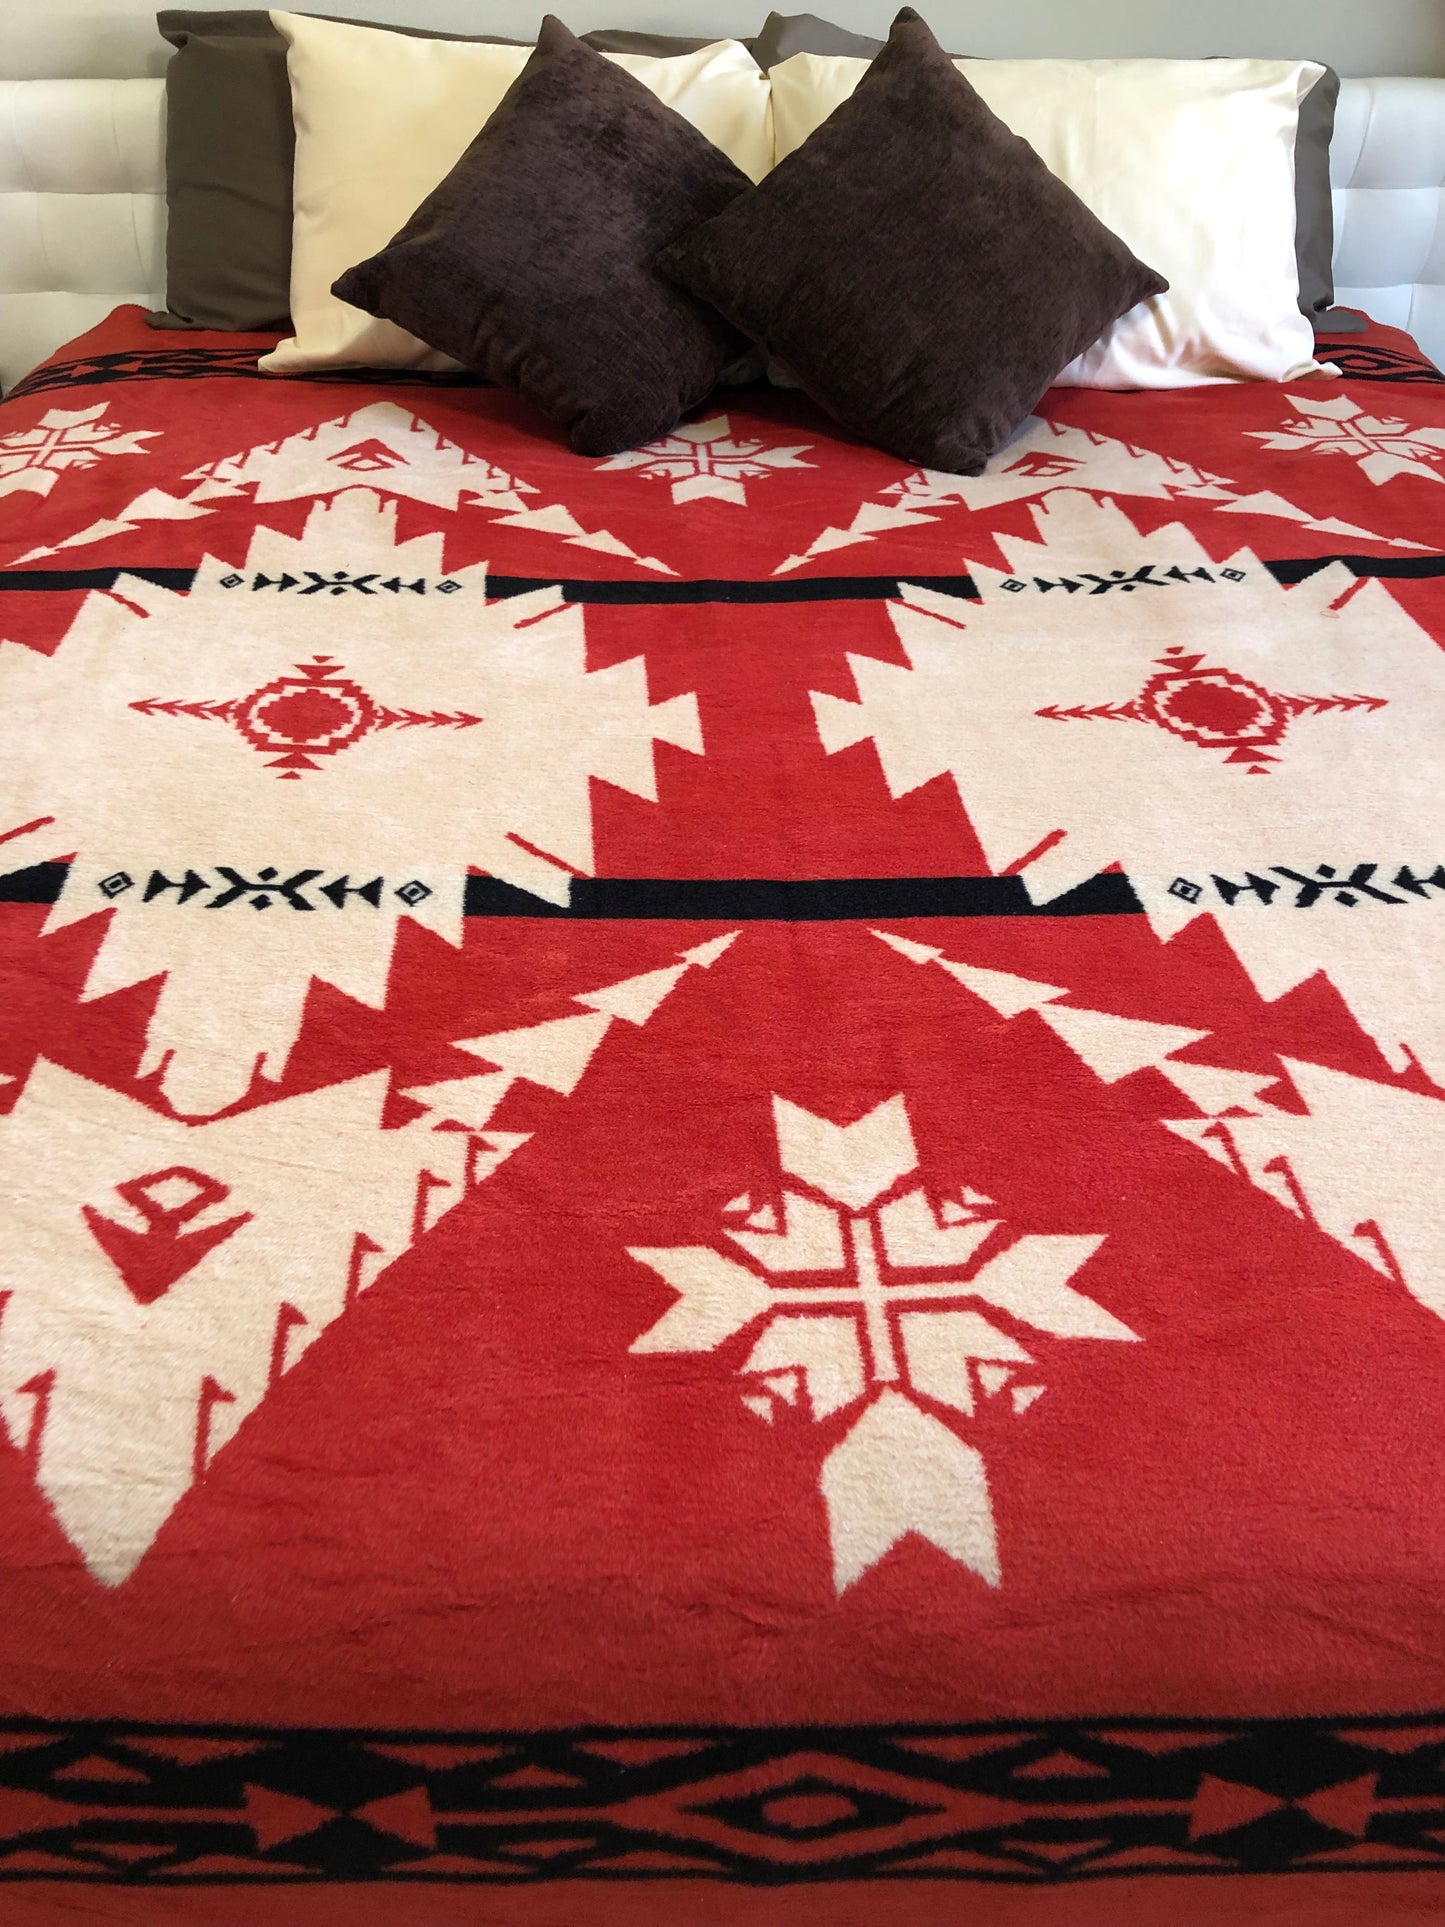 Beacon Blankets Southwestern Inca Native American Design Premium Thick Plush Cotton Blend Blanket/Throw